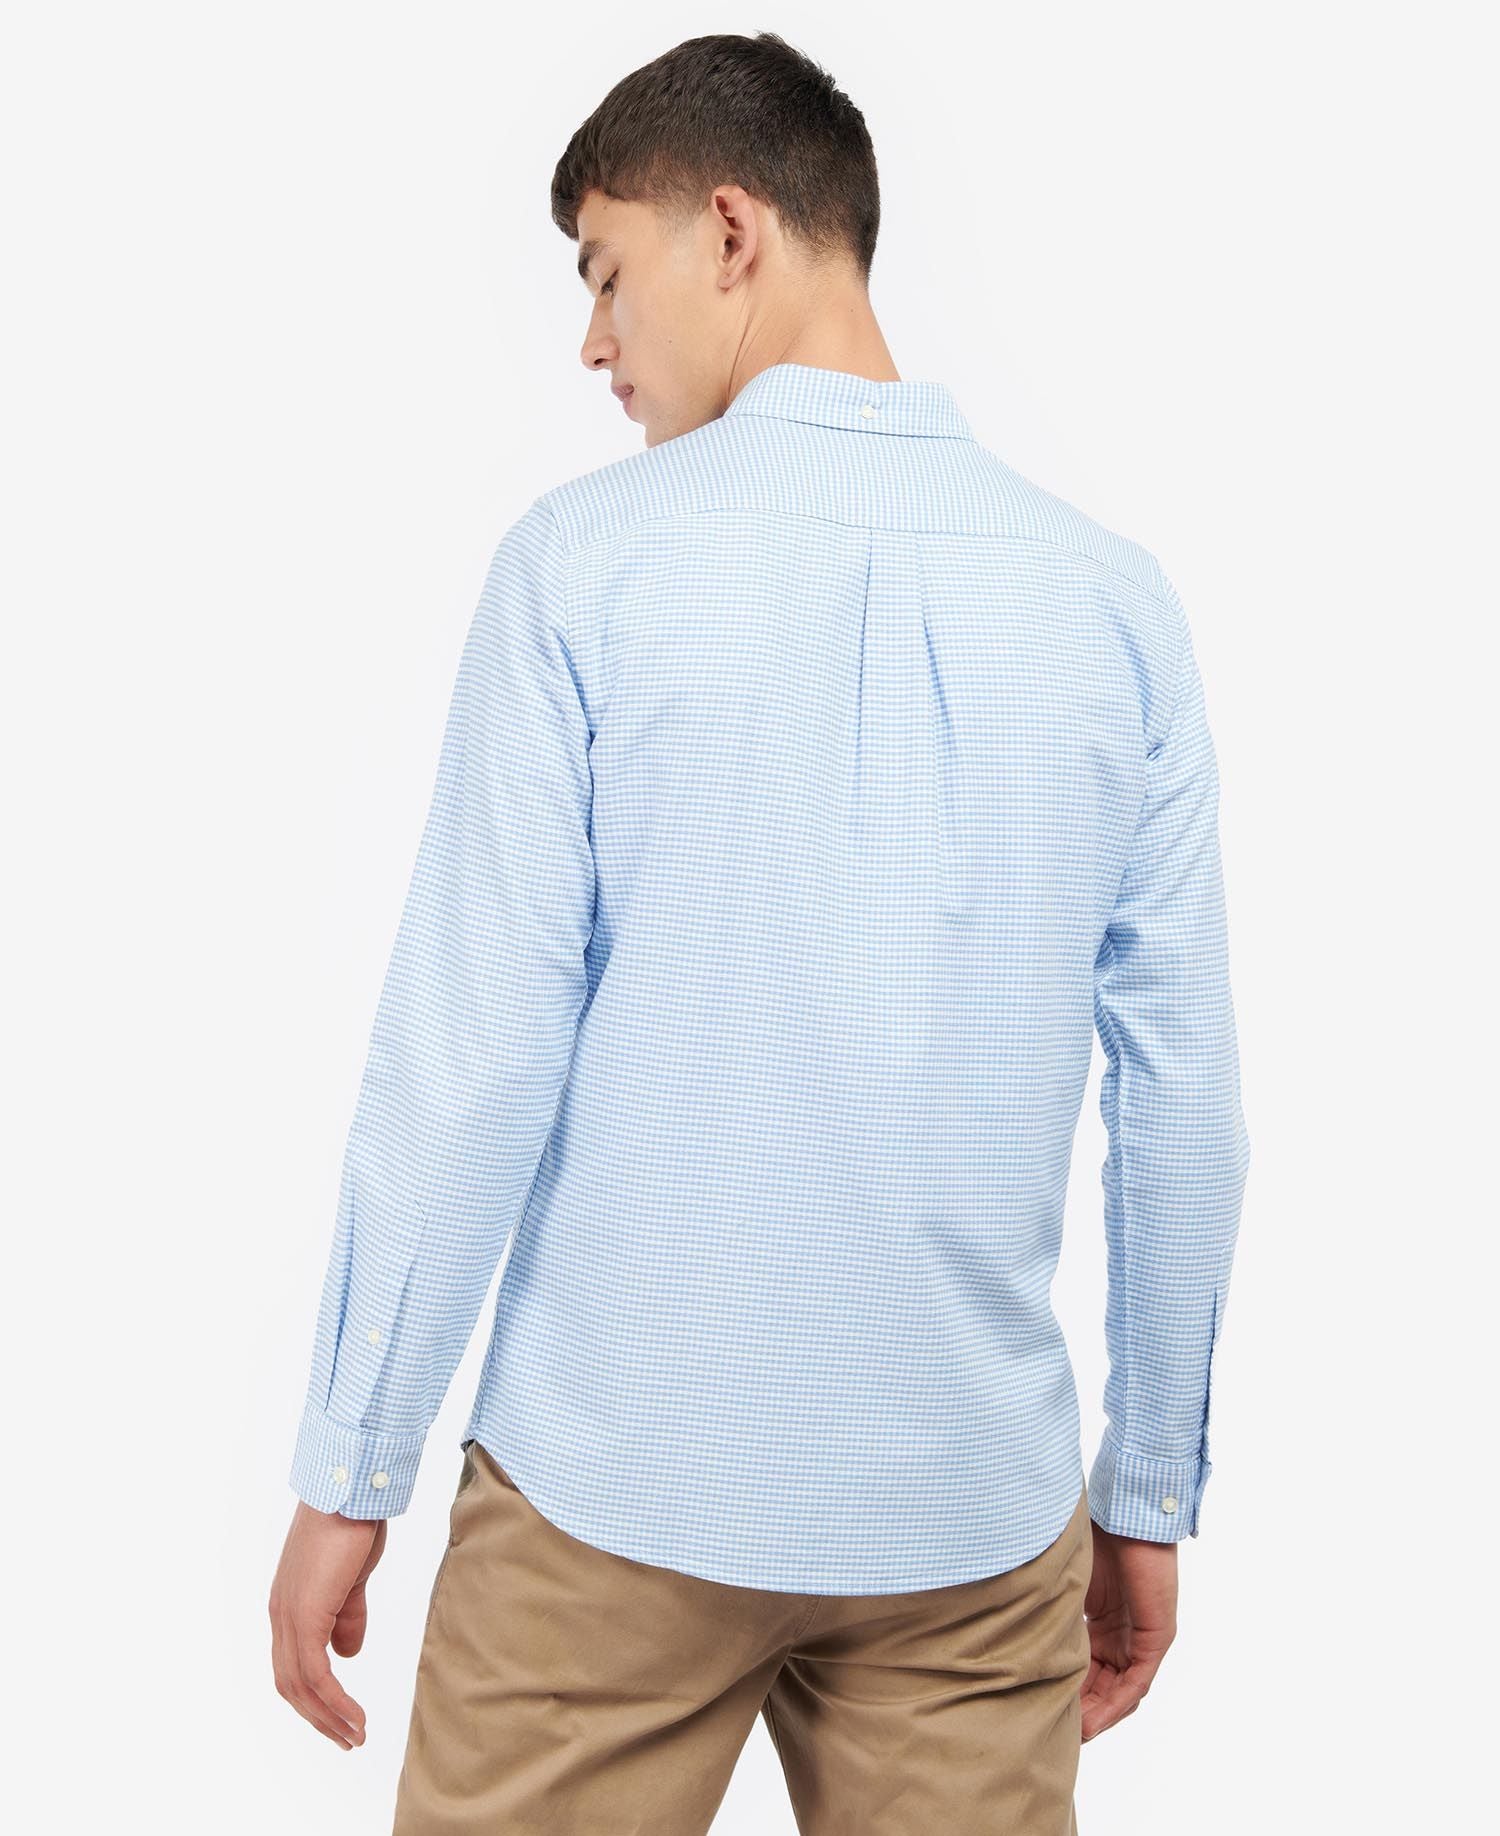 Men's Gingham Oxtown Tailored Shirt - Sky Blue